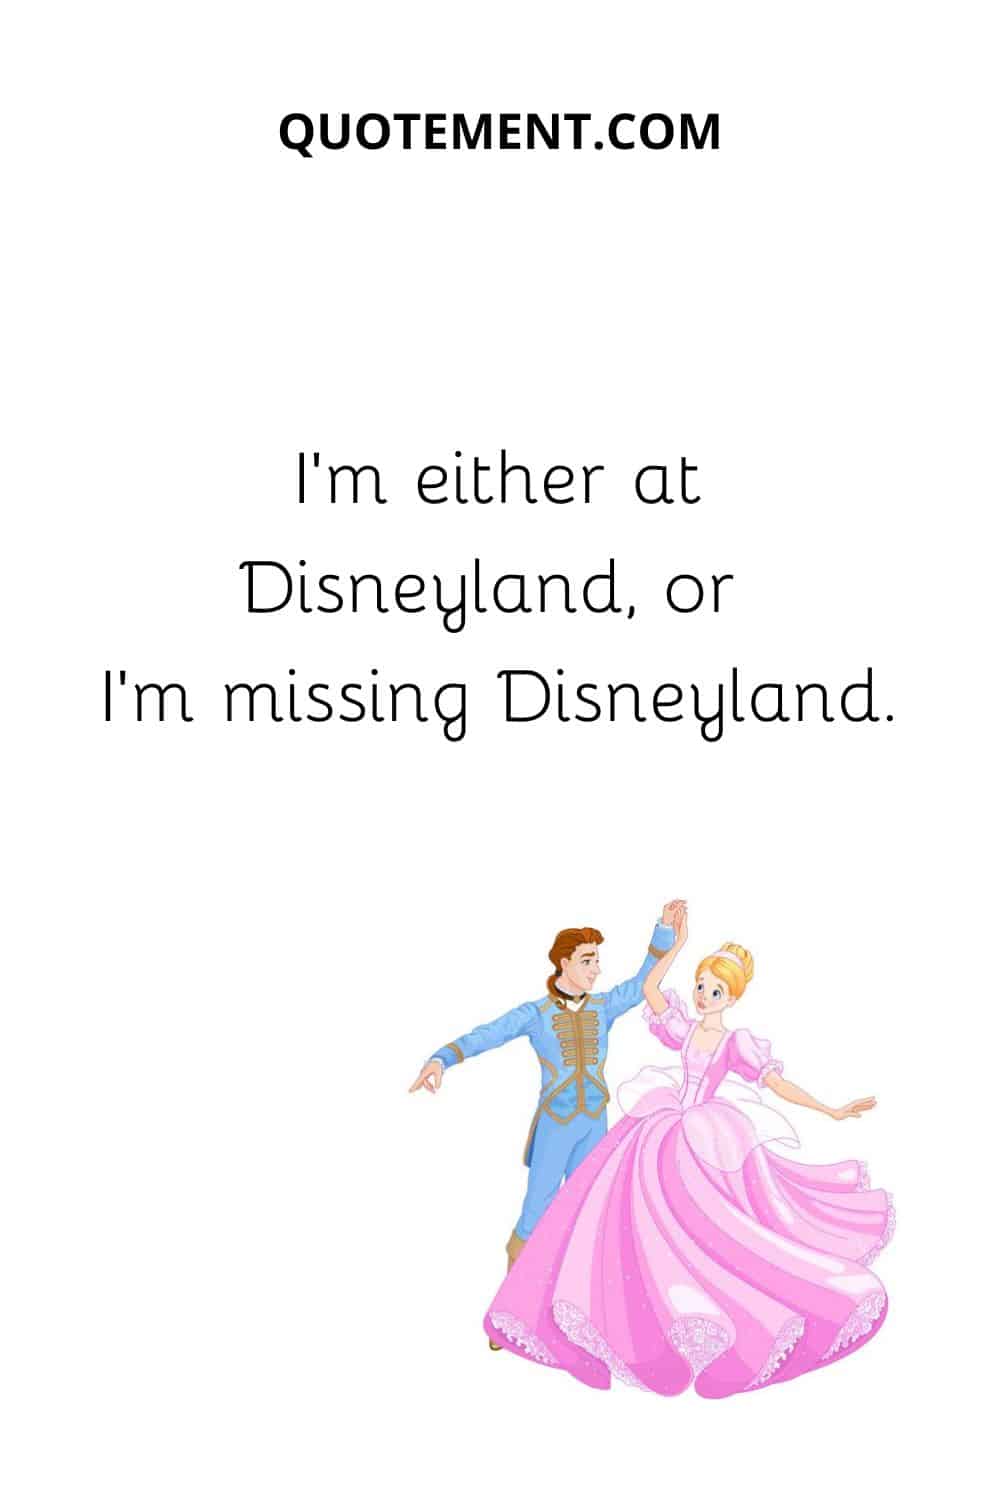 I’m either at Disneyland, or I’m missing Disneyland.